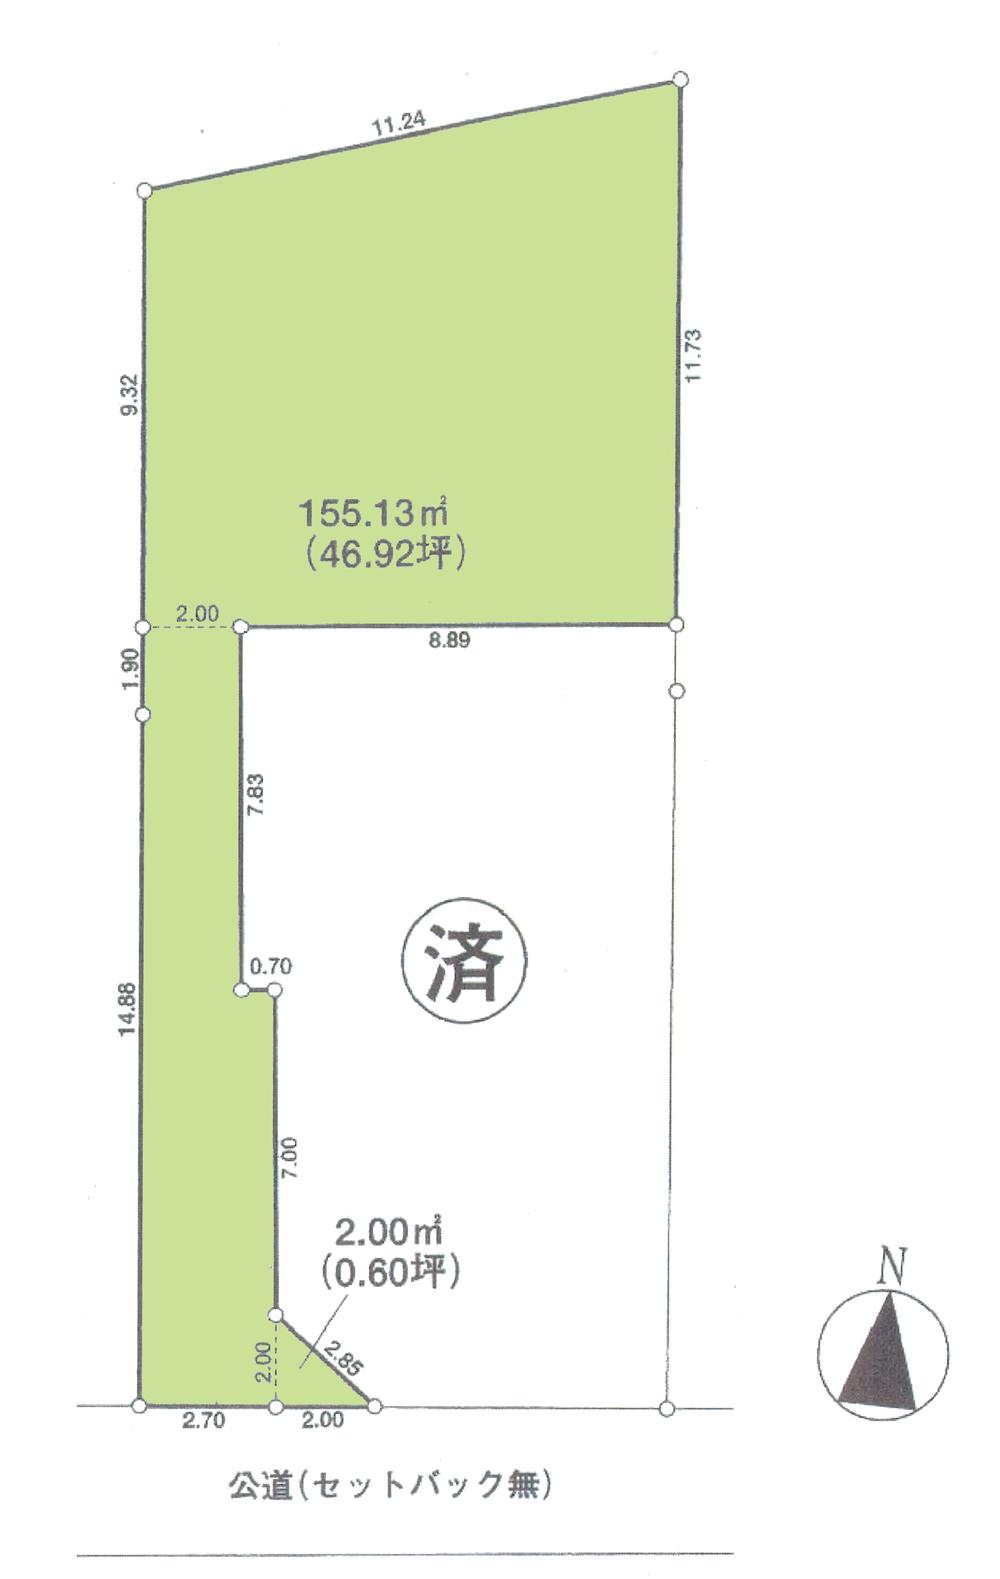 Compartment figure. Land price 24.5 million yen, Land area 155.13 sq m compartment view